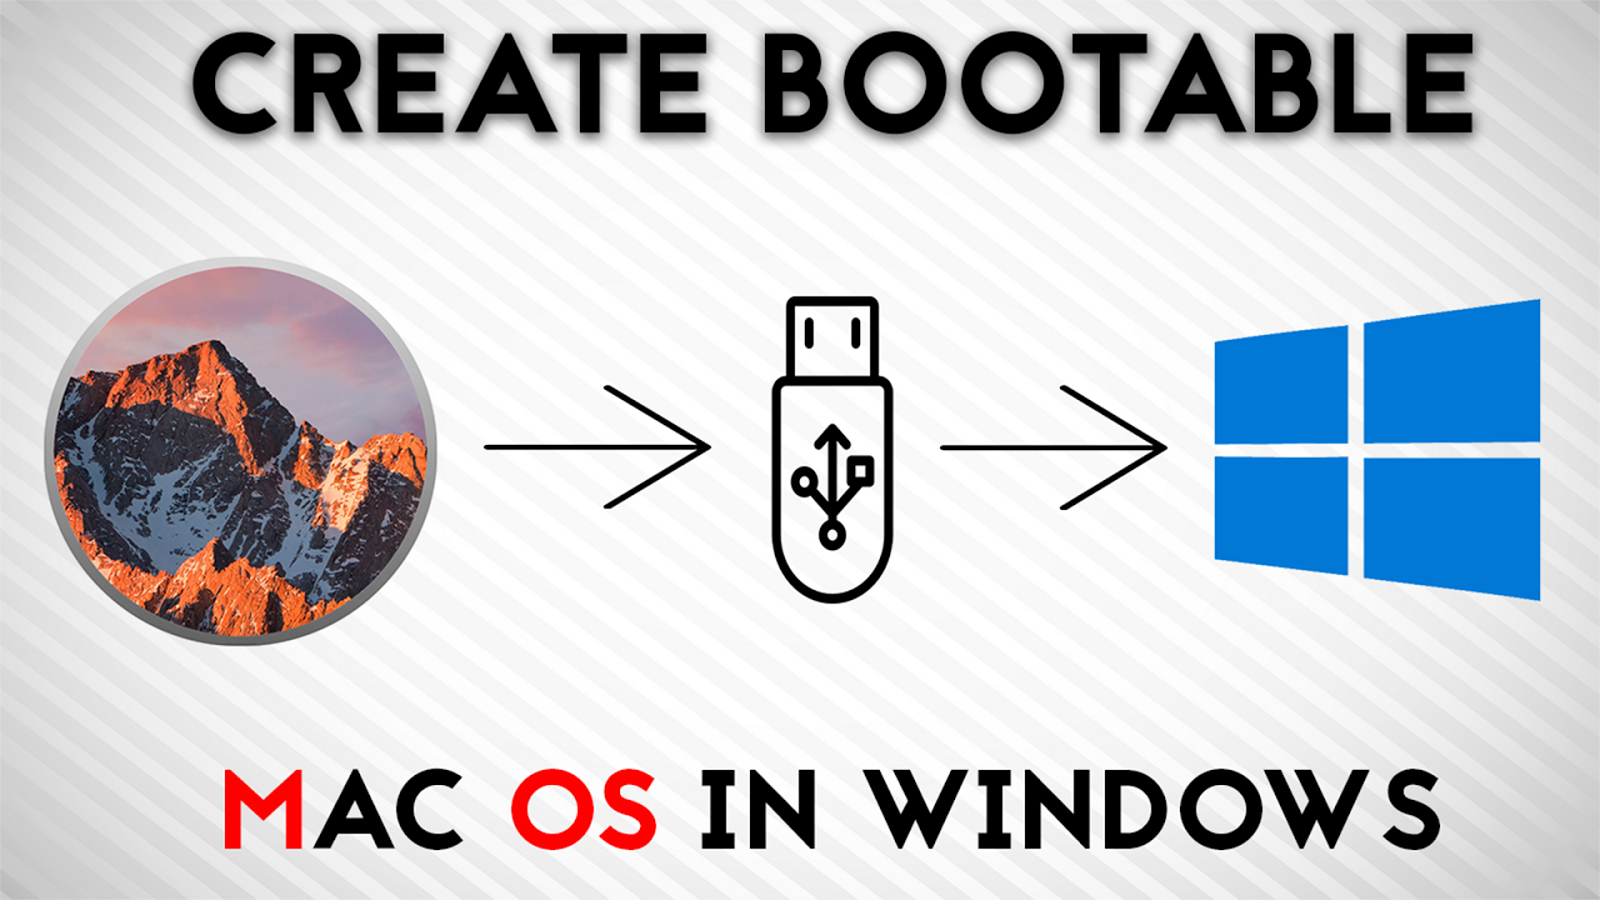 how to create bootable macos usb on windows